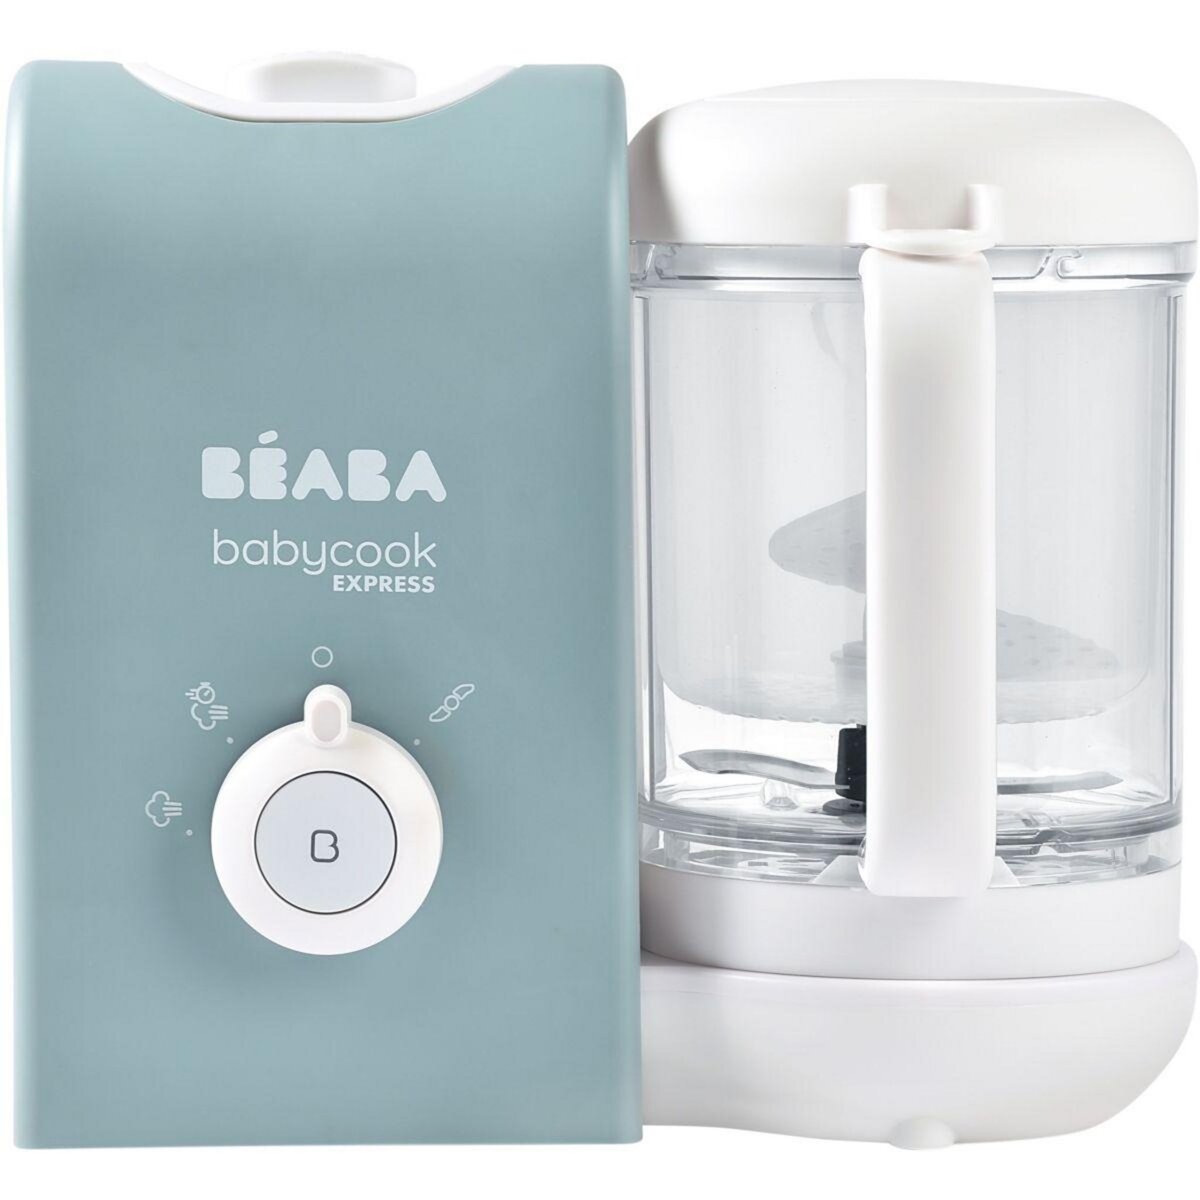 Beaba robot bébé babycook duo blanc & argent BEABA Pas Cher 